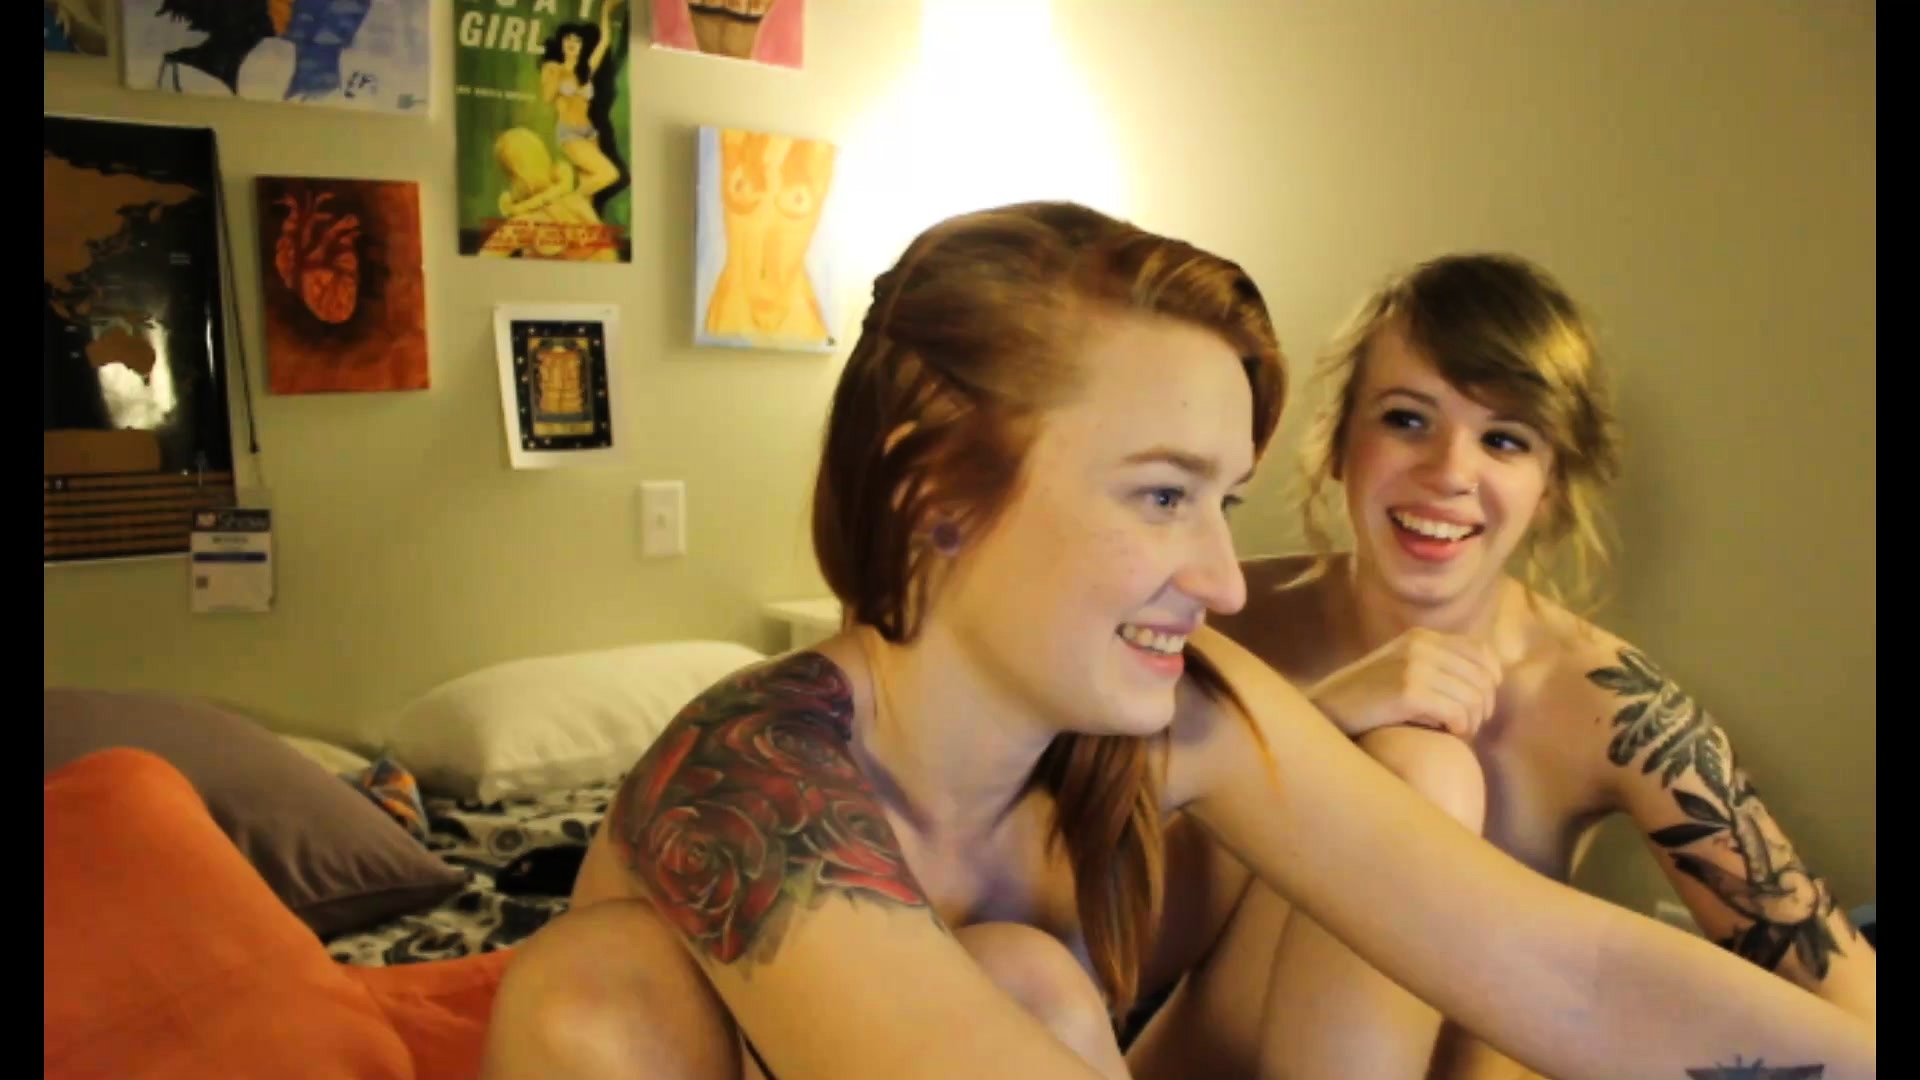 Cute Amateur Teens Enjoys A Hot Lesbian Experience On Webcam Video at Porn